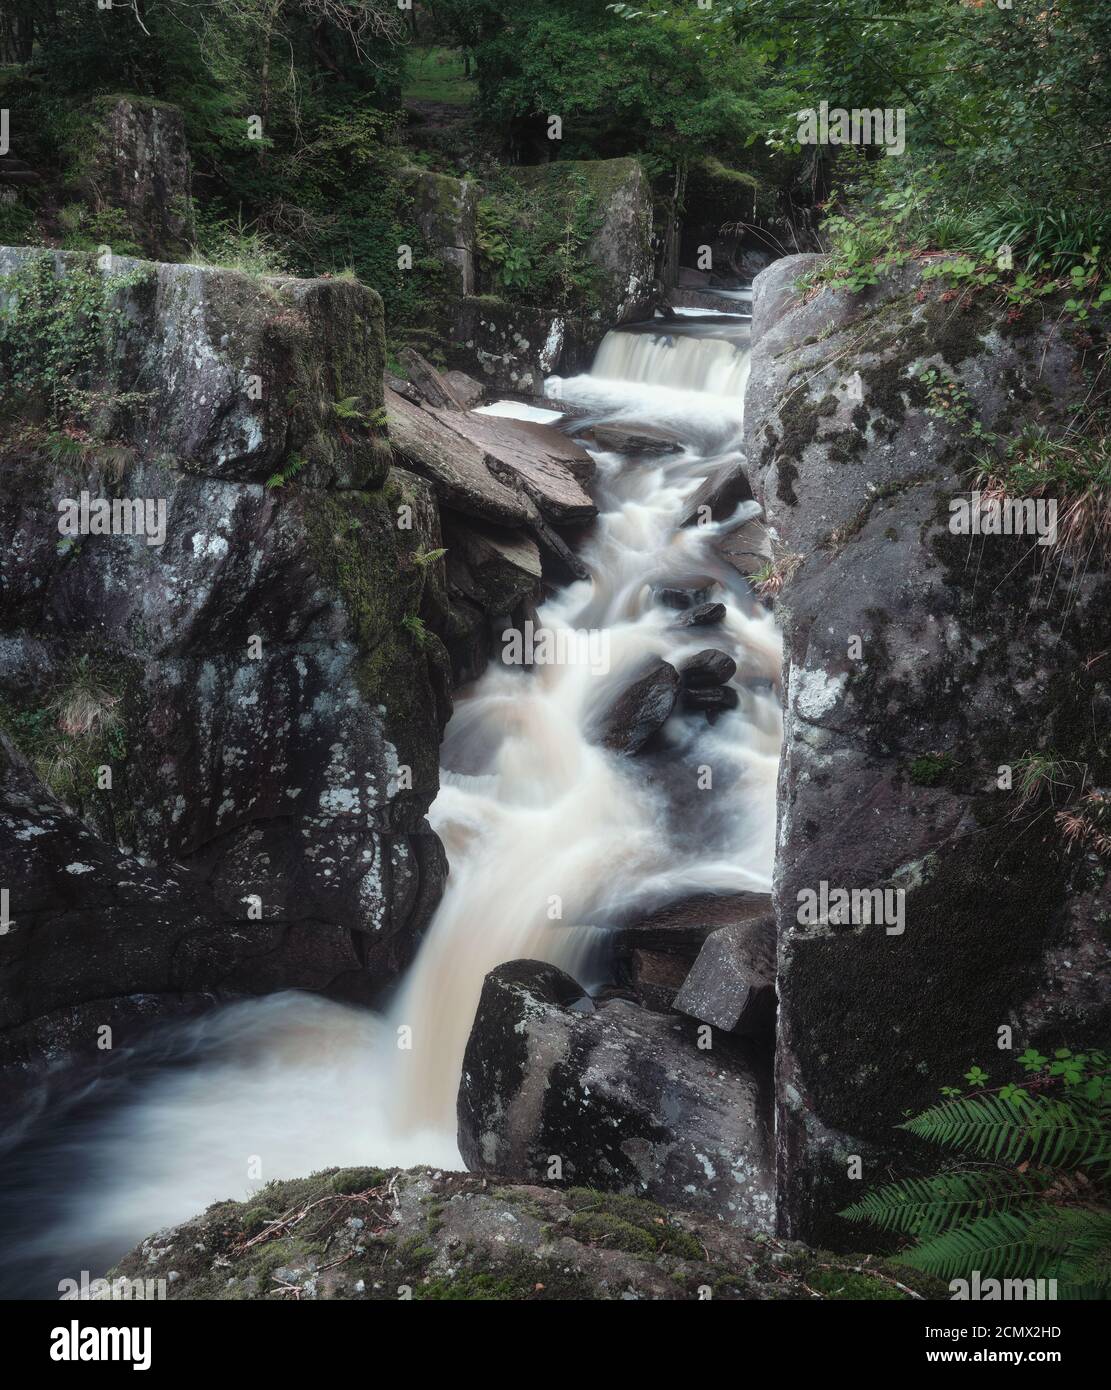 Rapid forest river with a waterfall. Bracklinn Falls, Callander. Loch Lomond and The Trossachs National Park, Scotland. Stock Photo